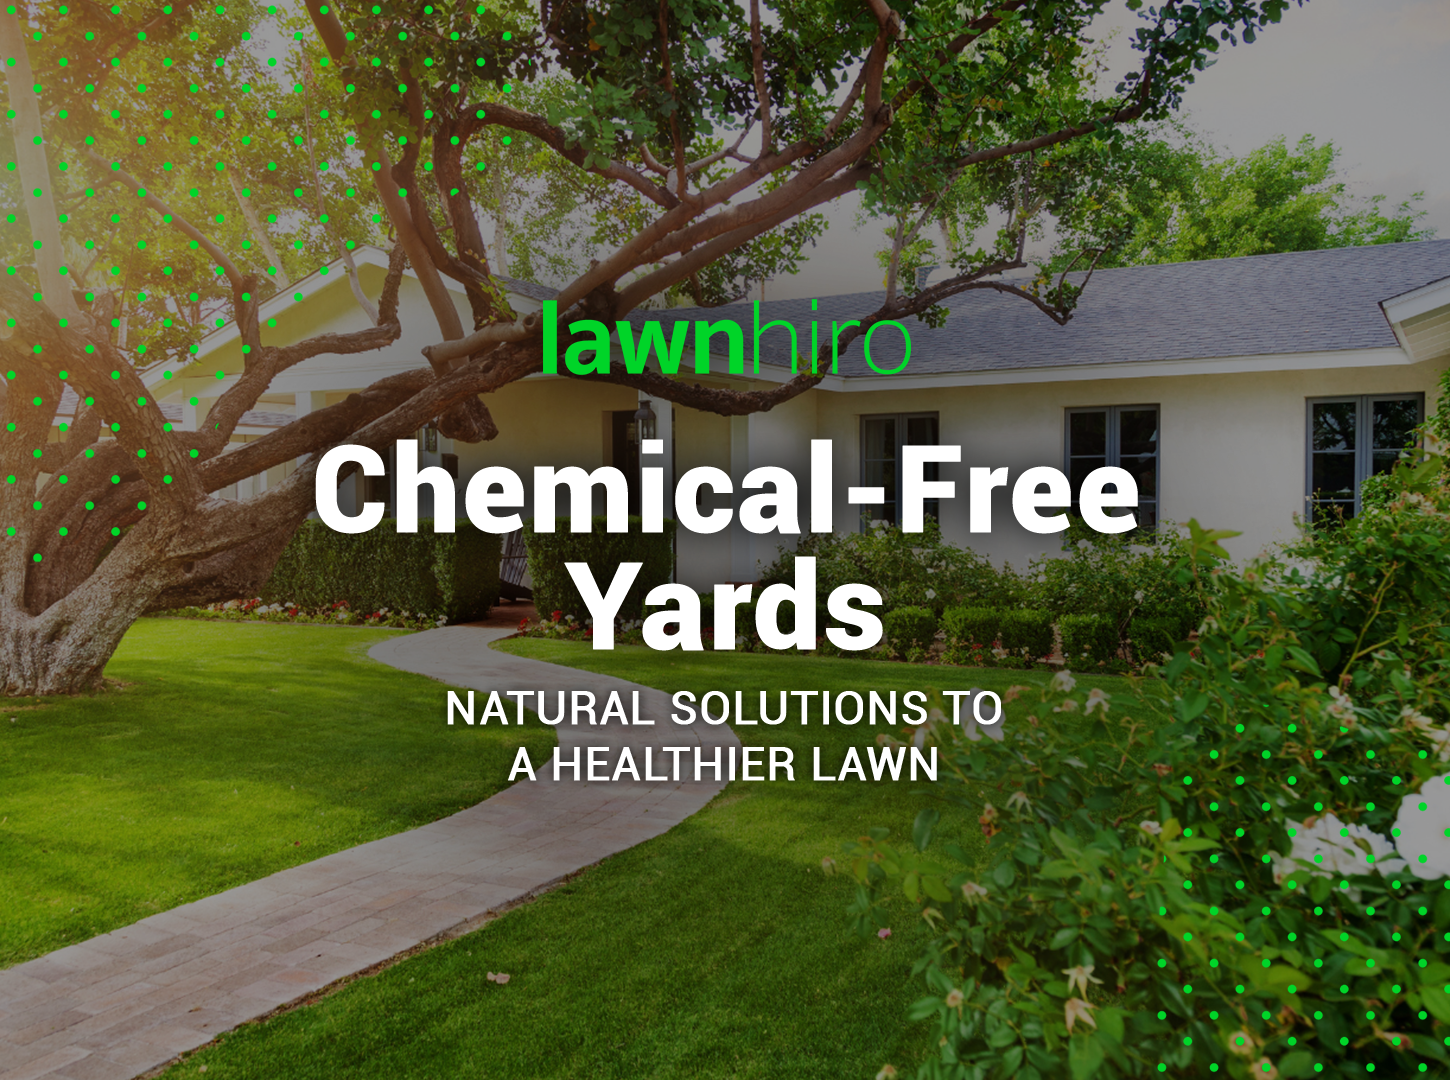 Chemical-free yards - Lawnhiro